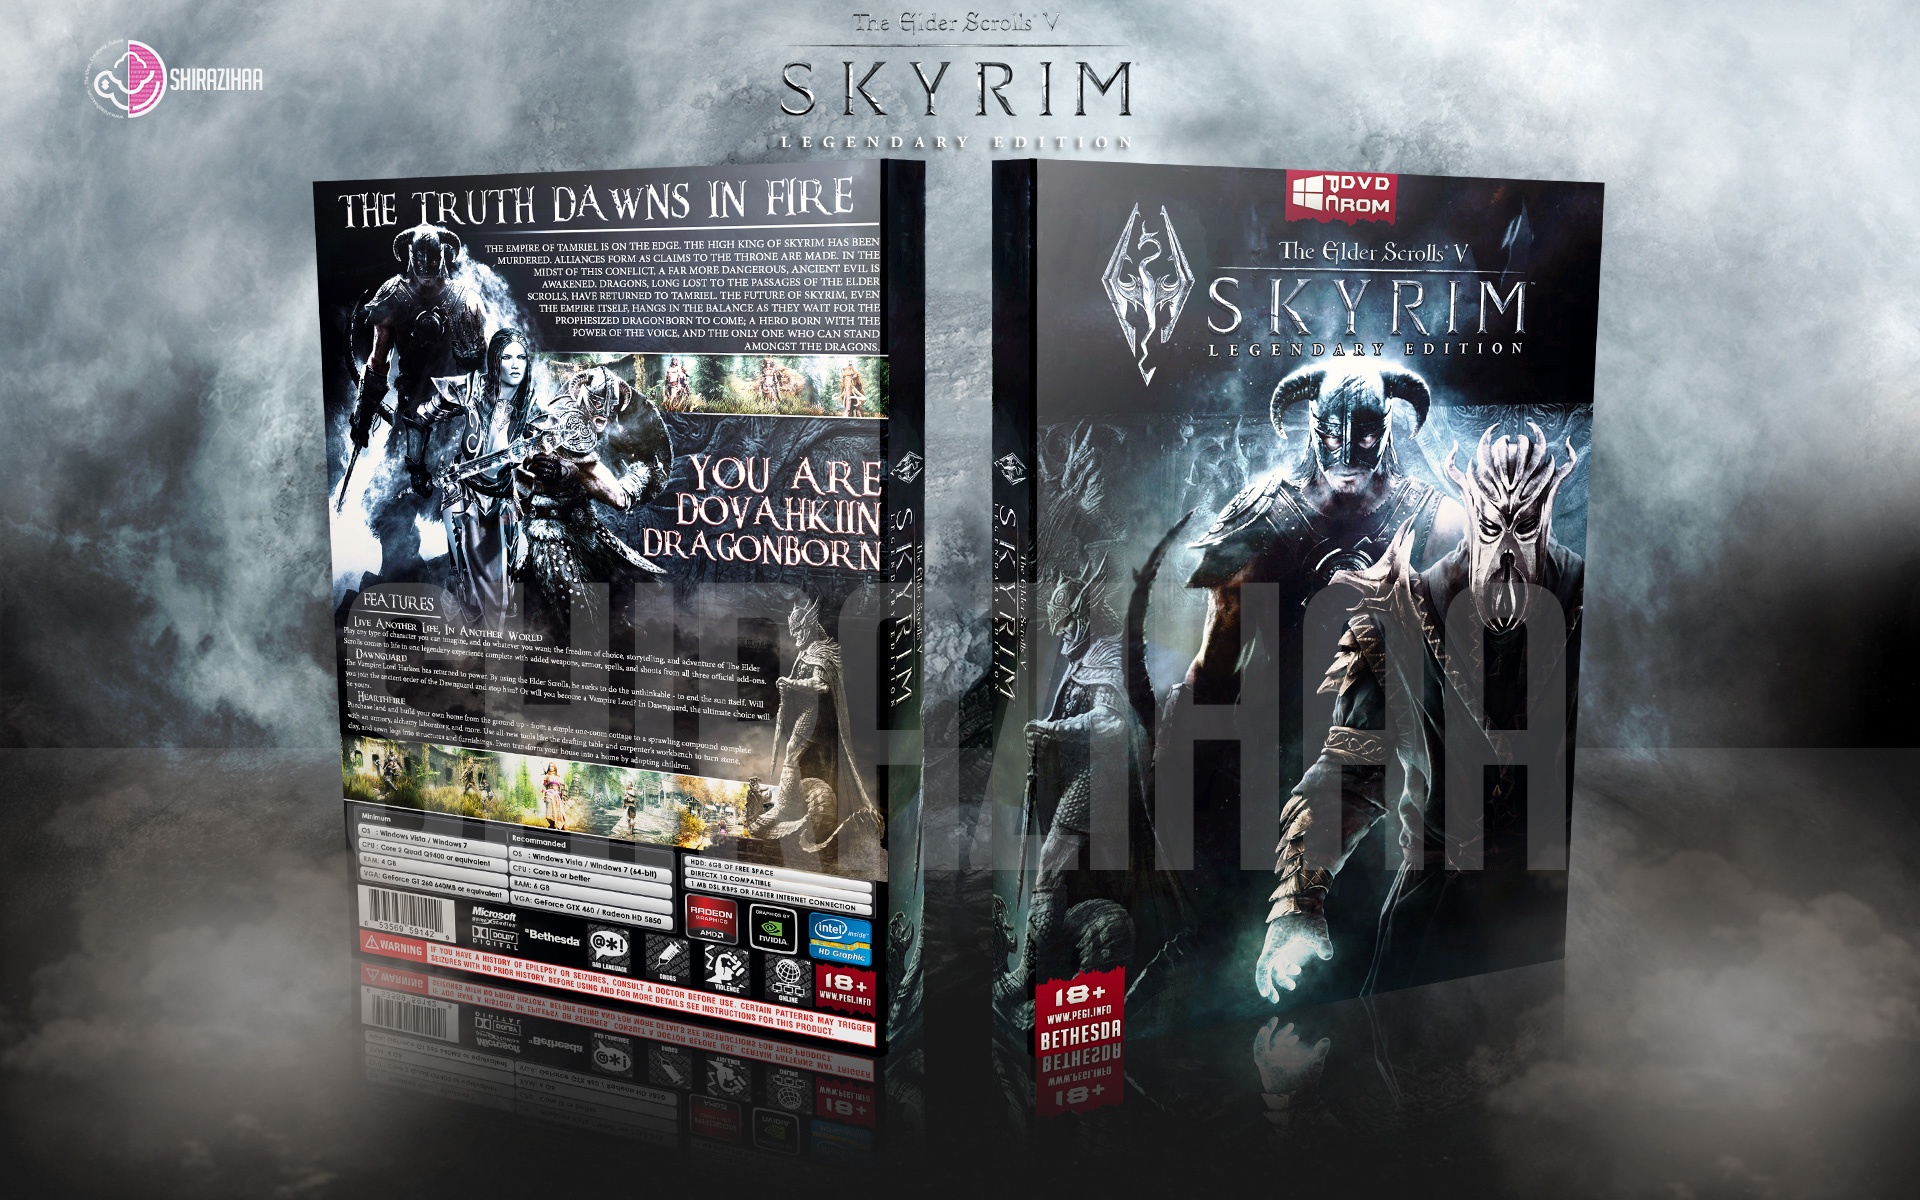 The Elder Scrolls V: Skyrim Legendary Edition box cover